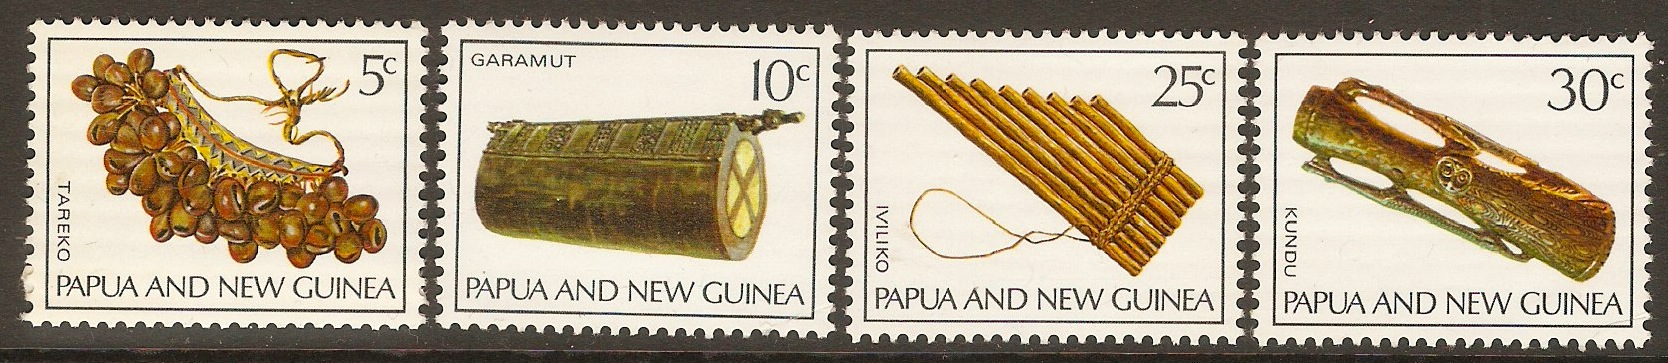 Papua New Guinea 1969 Musical Instruments set. SG165-SG168.